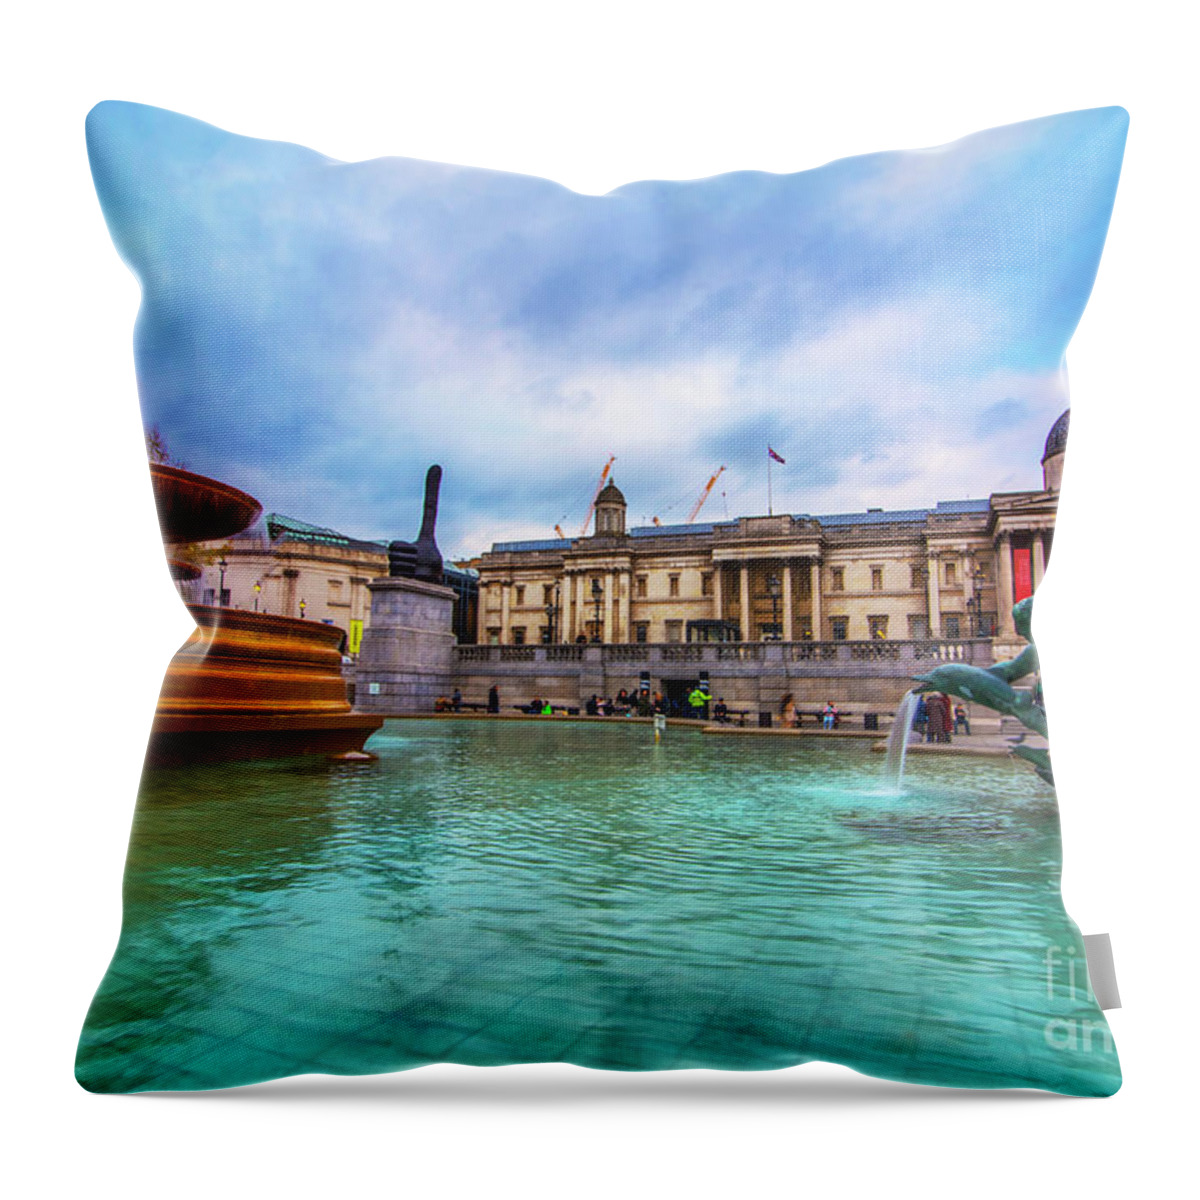 Trafalgar Square Throw Pillow featuring the photograph Trafalgar Square Fountain London by Alex Art